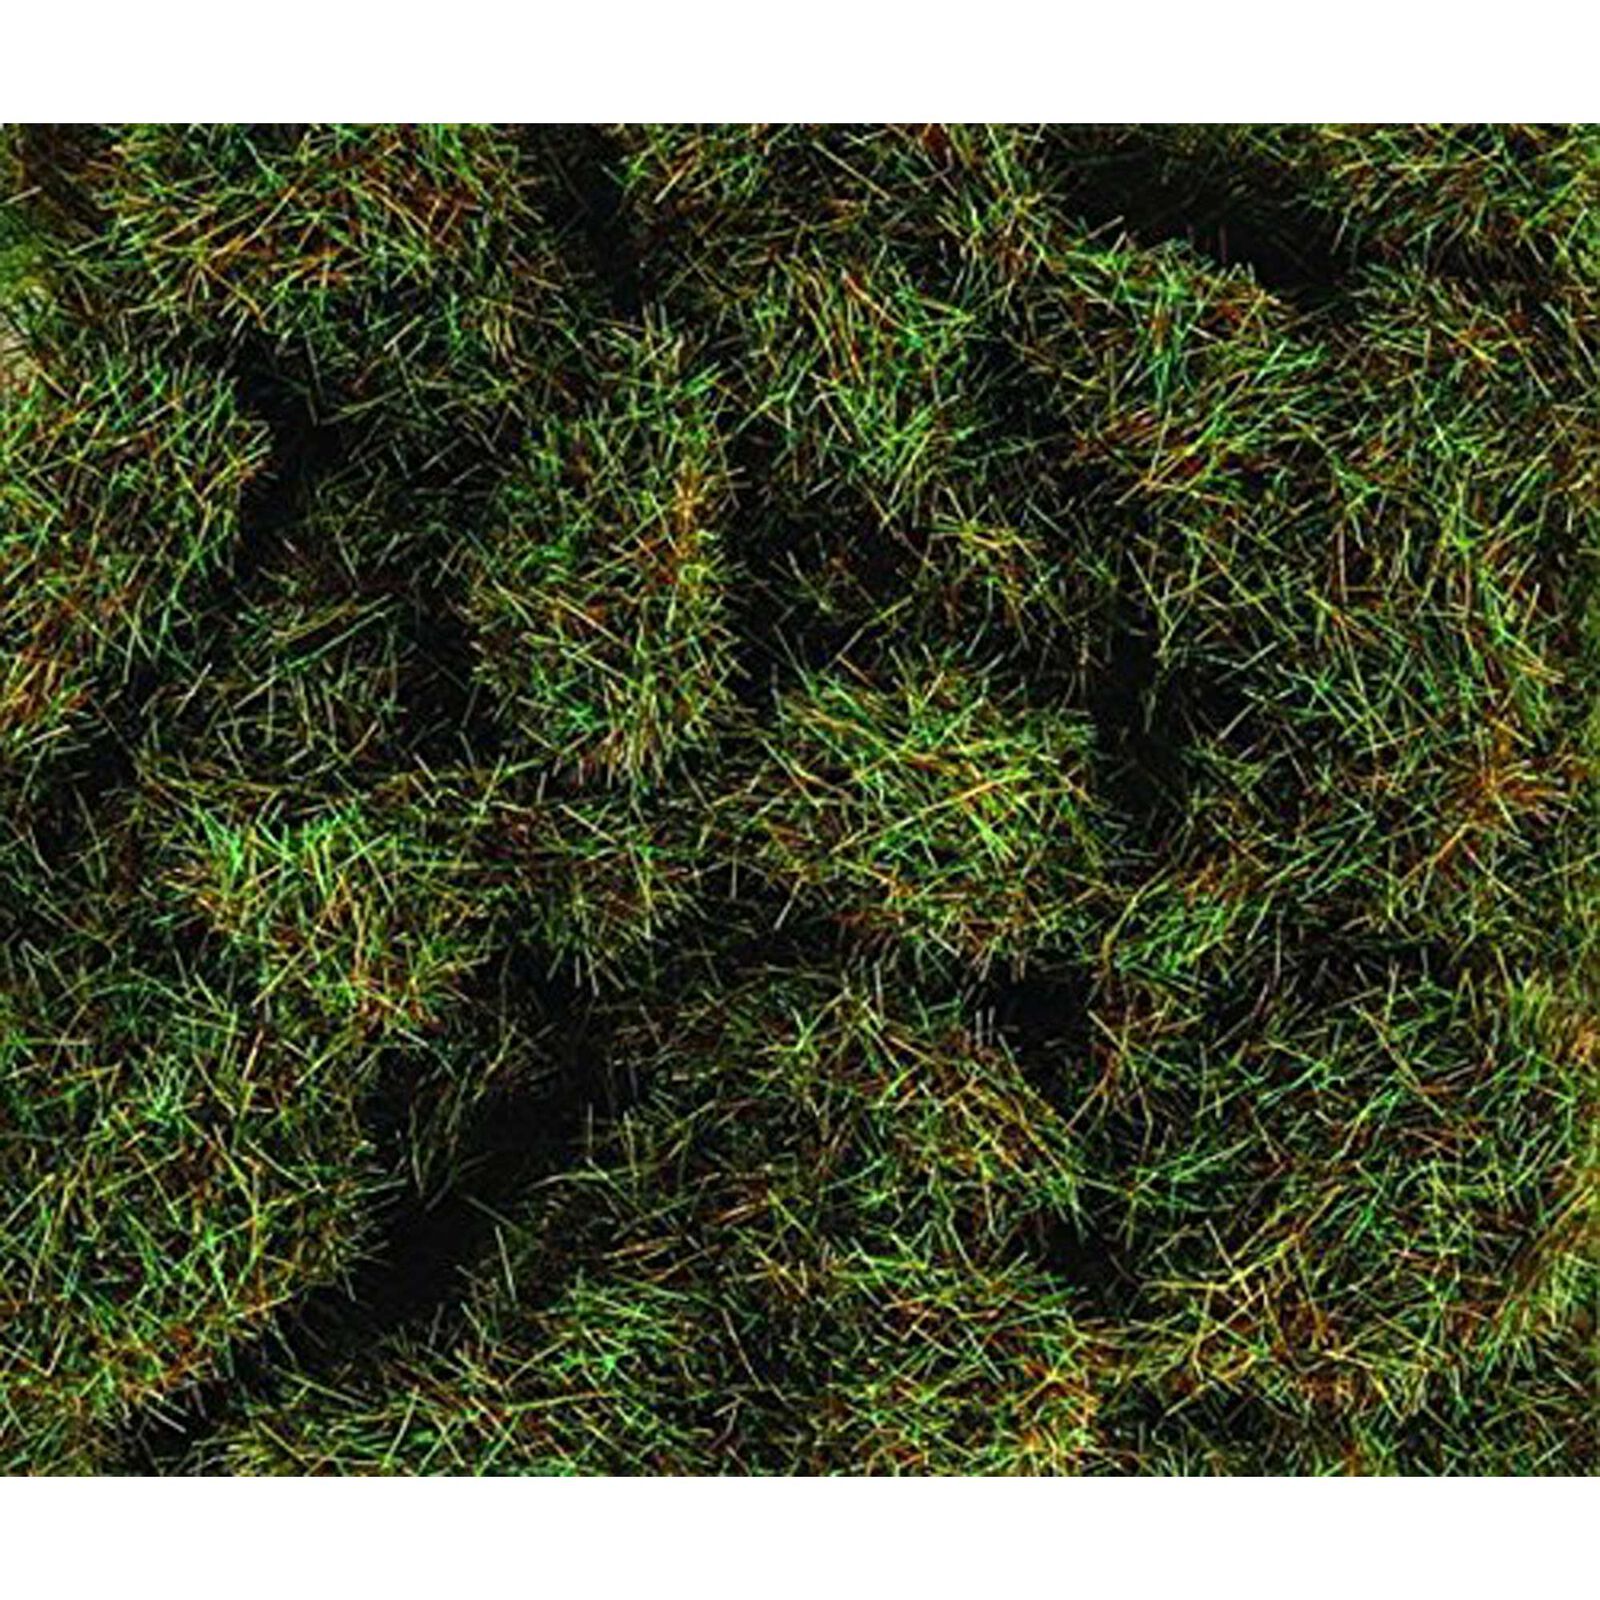 4mm 3 16" Static Grass Autumn 20g 0.7oz